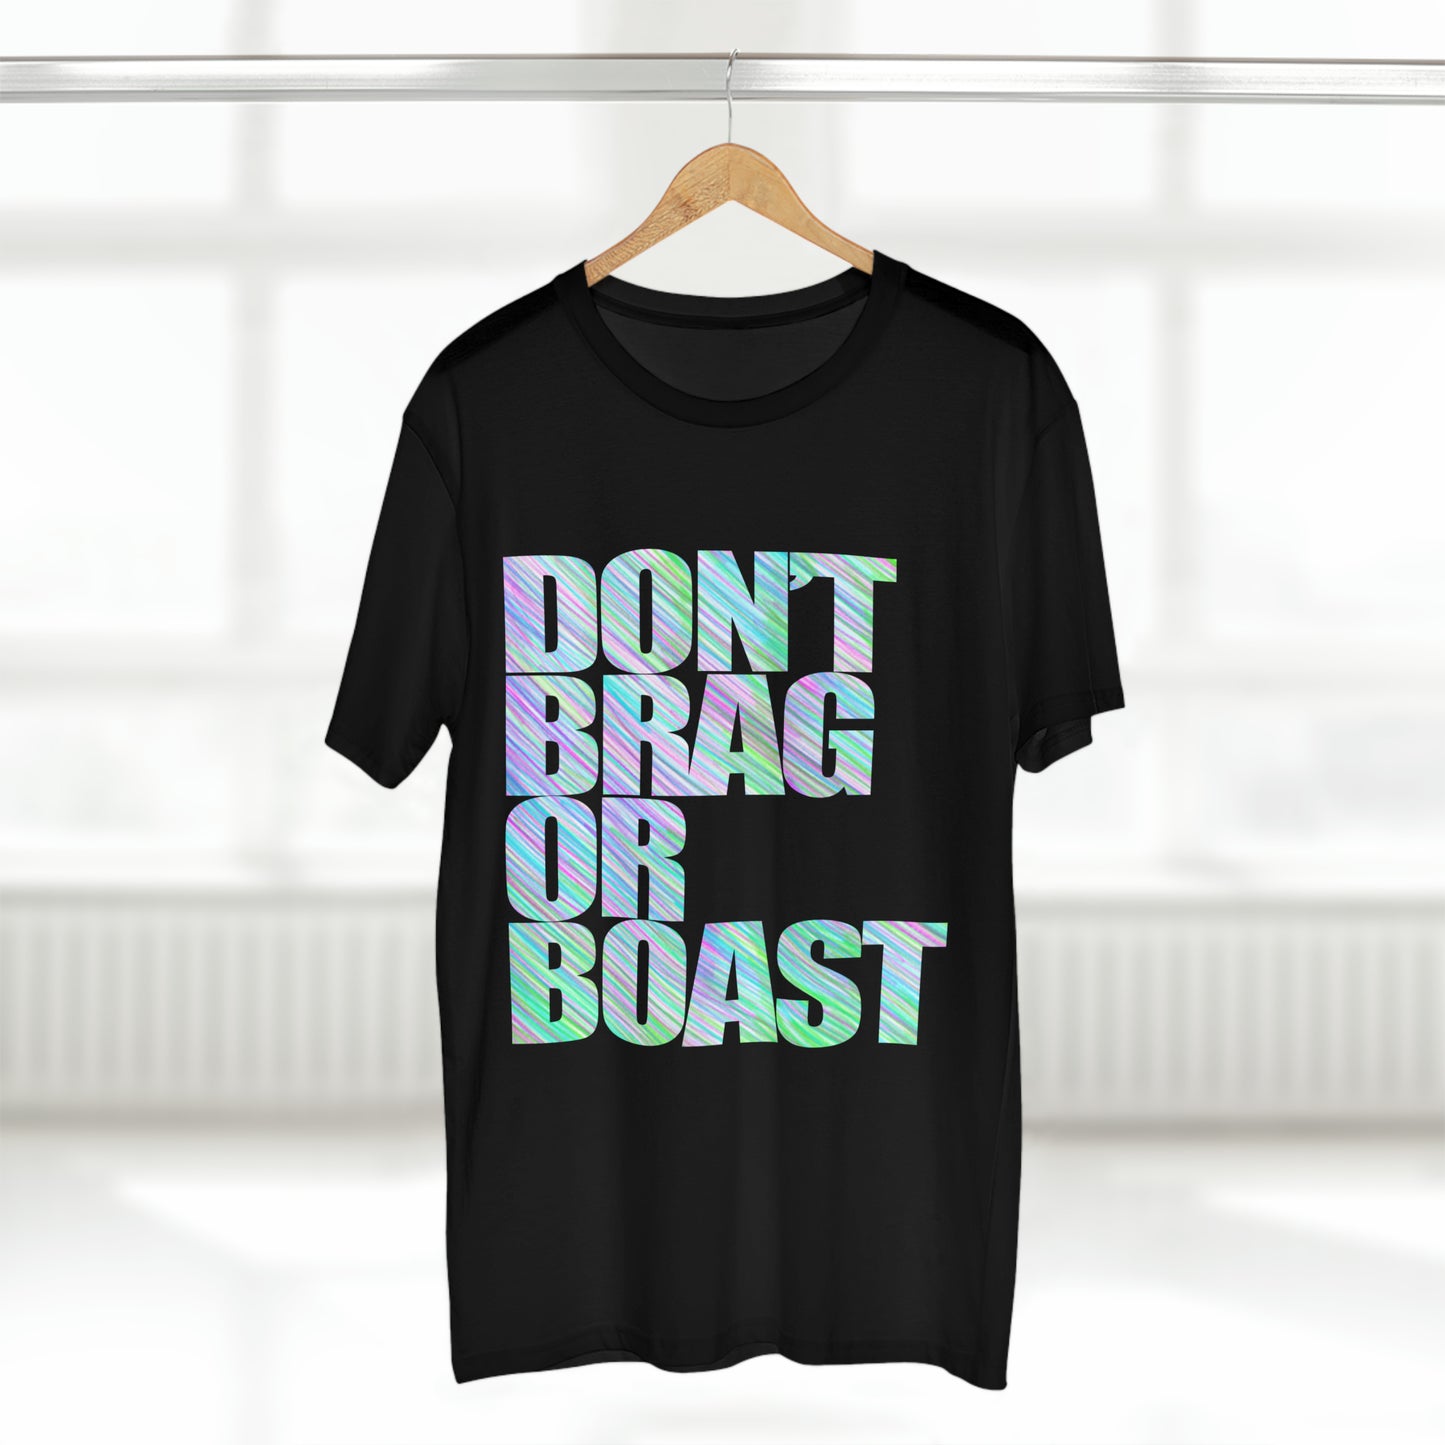 Don't Brag Or Boast Shirt